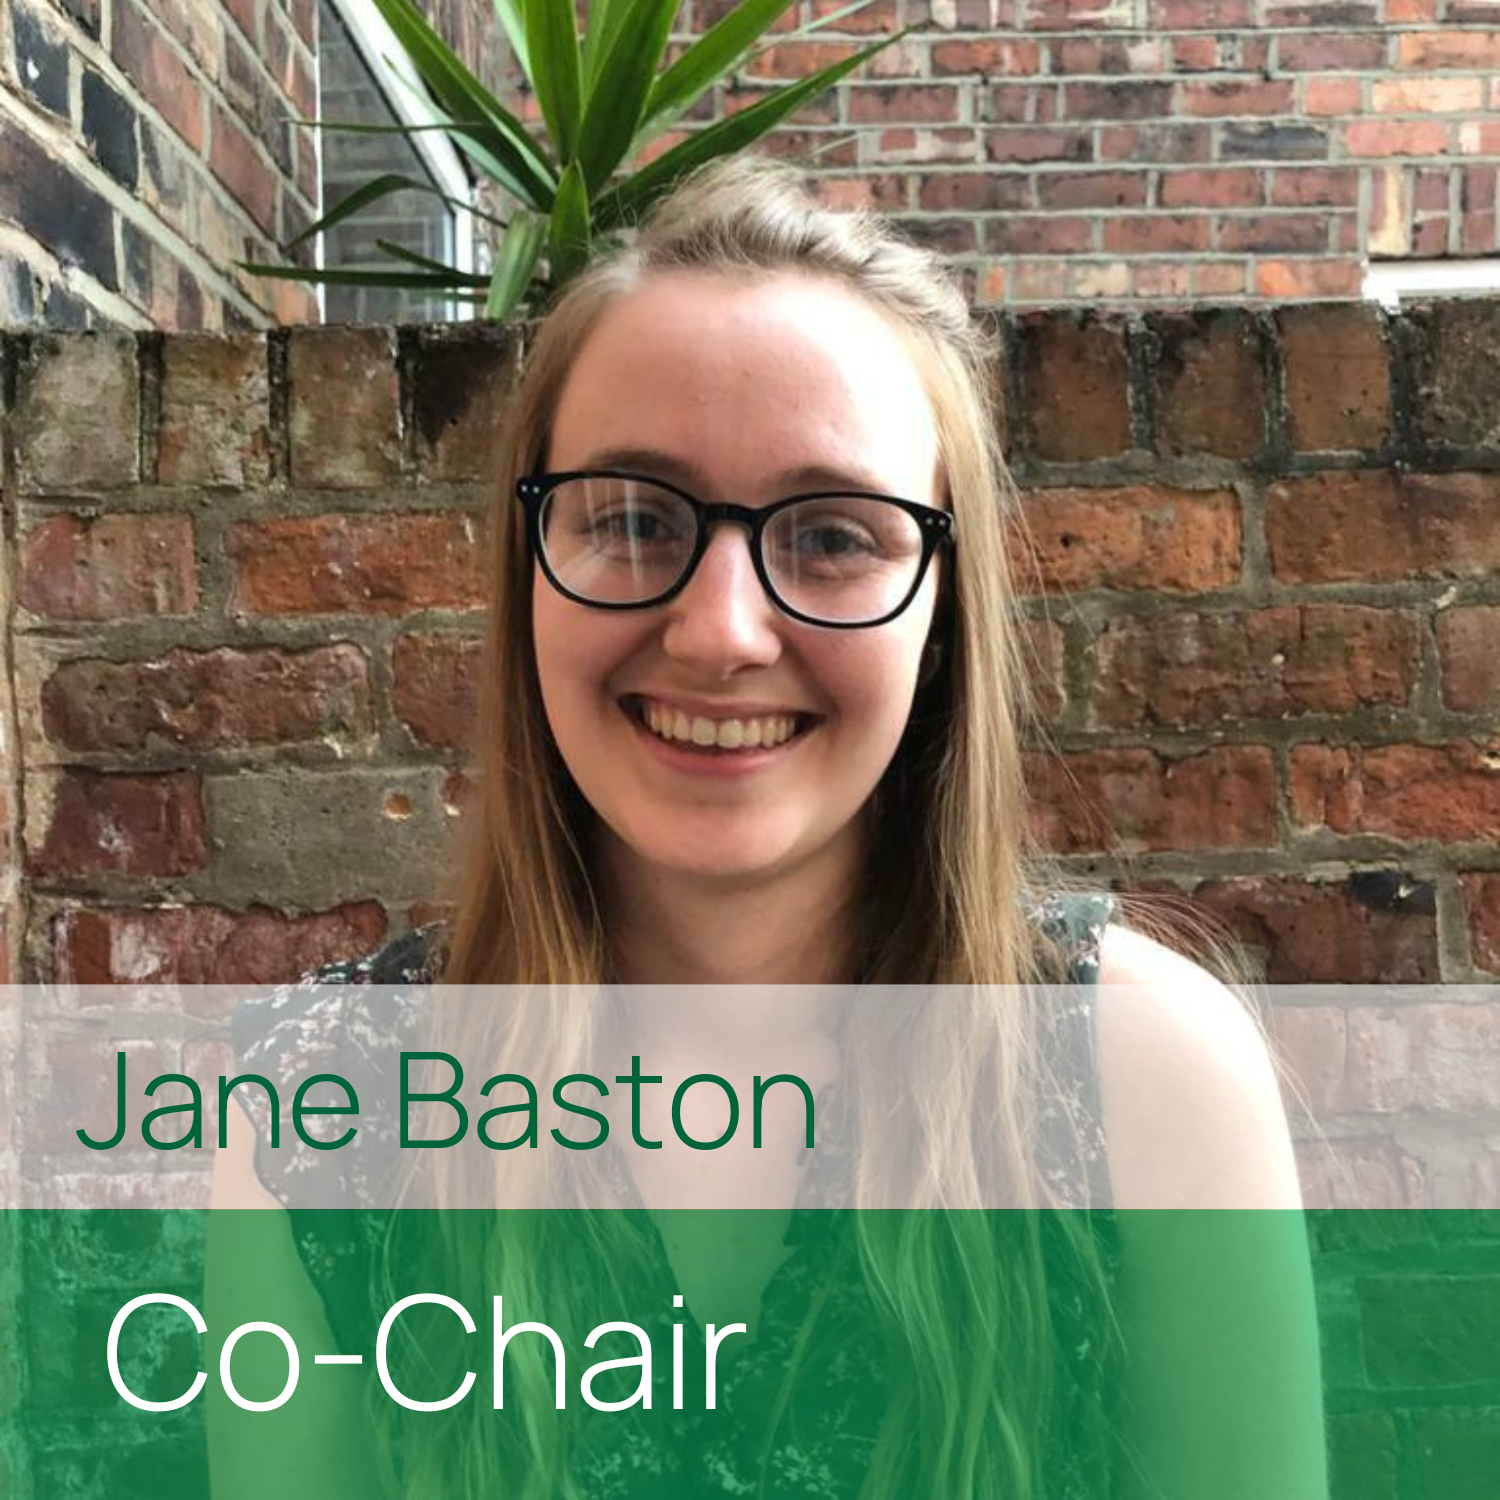 Photo of Jane Baston smiling to camera. Text: Jane Baston, Ch-Chair